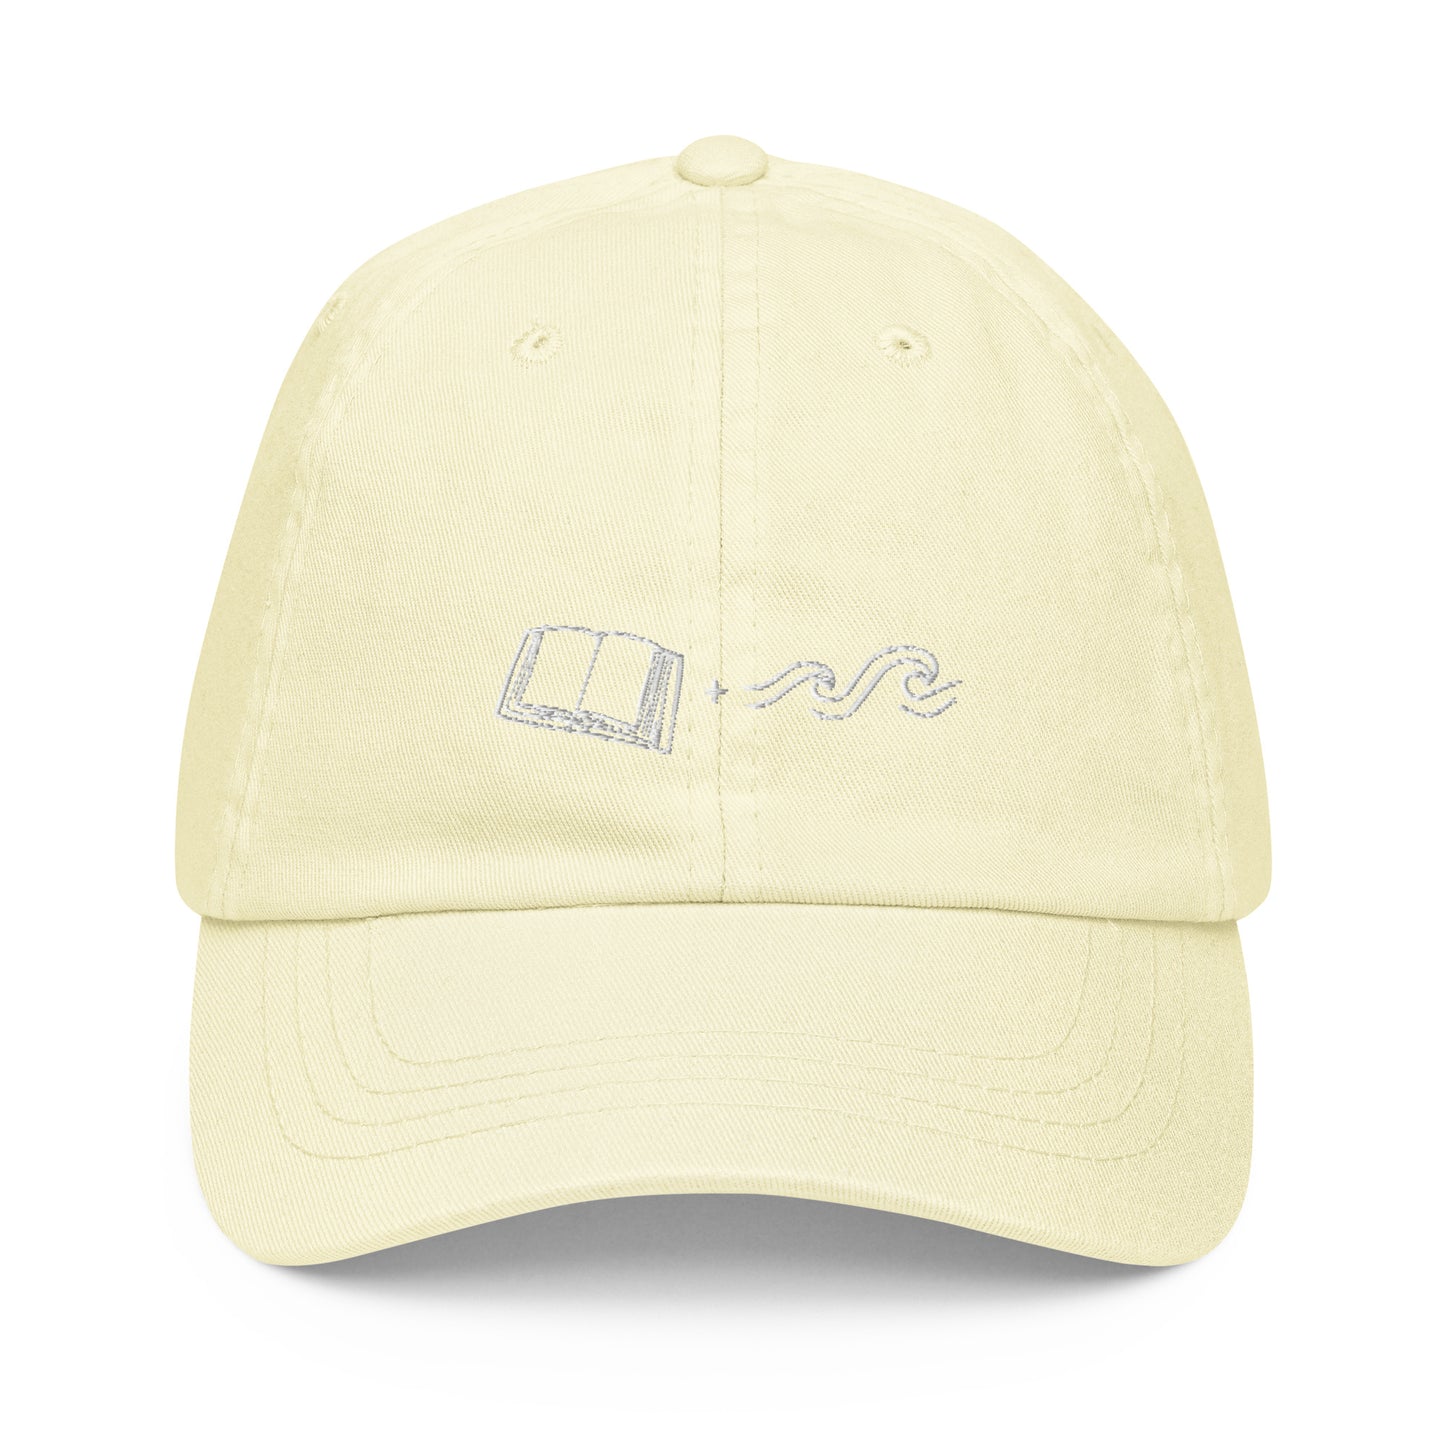 books + waves hat